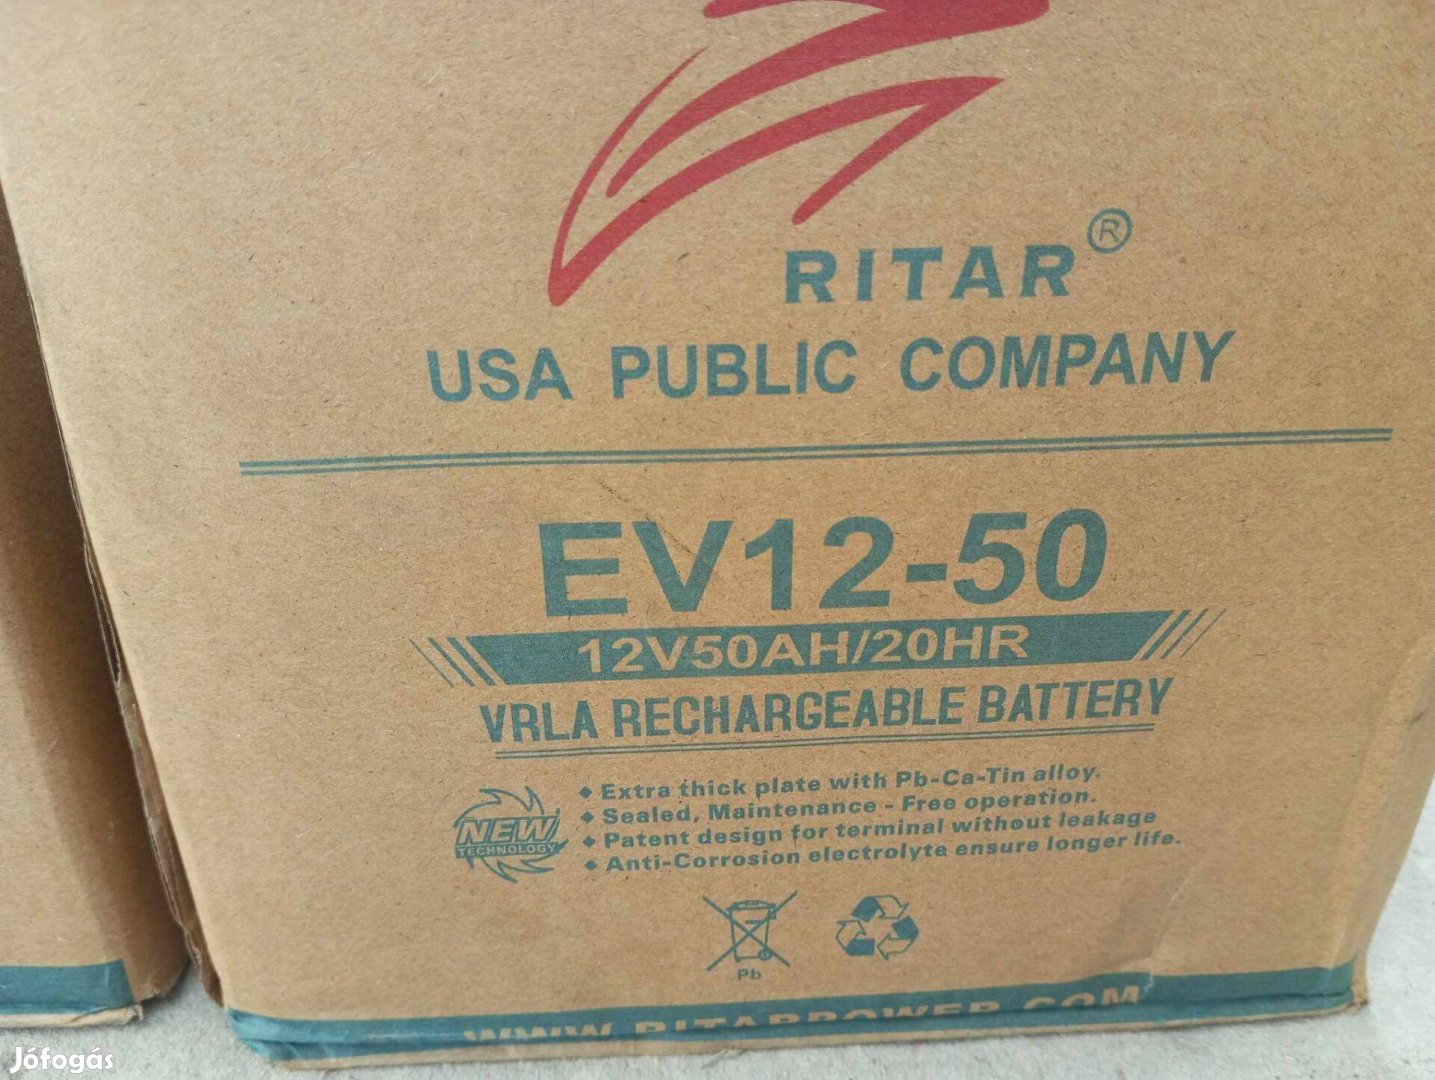 Ritar 12v/50Ah munka akkumulátor